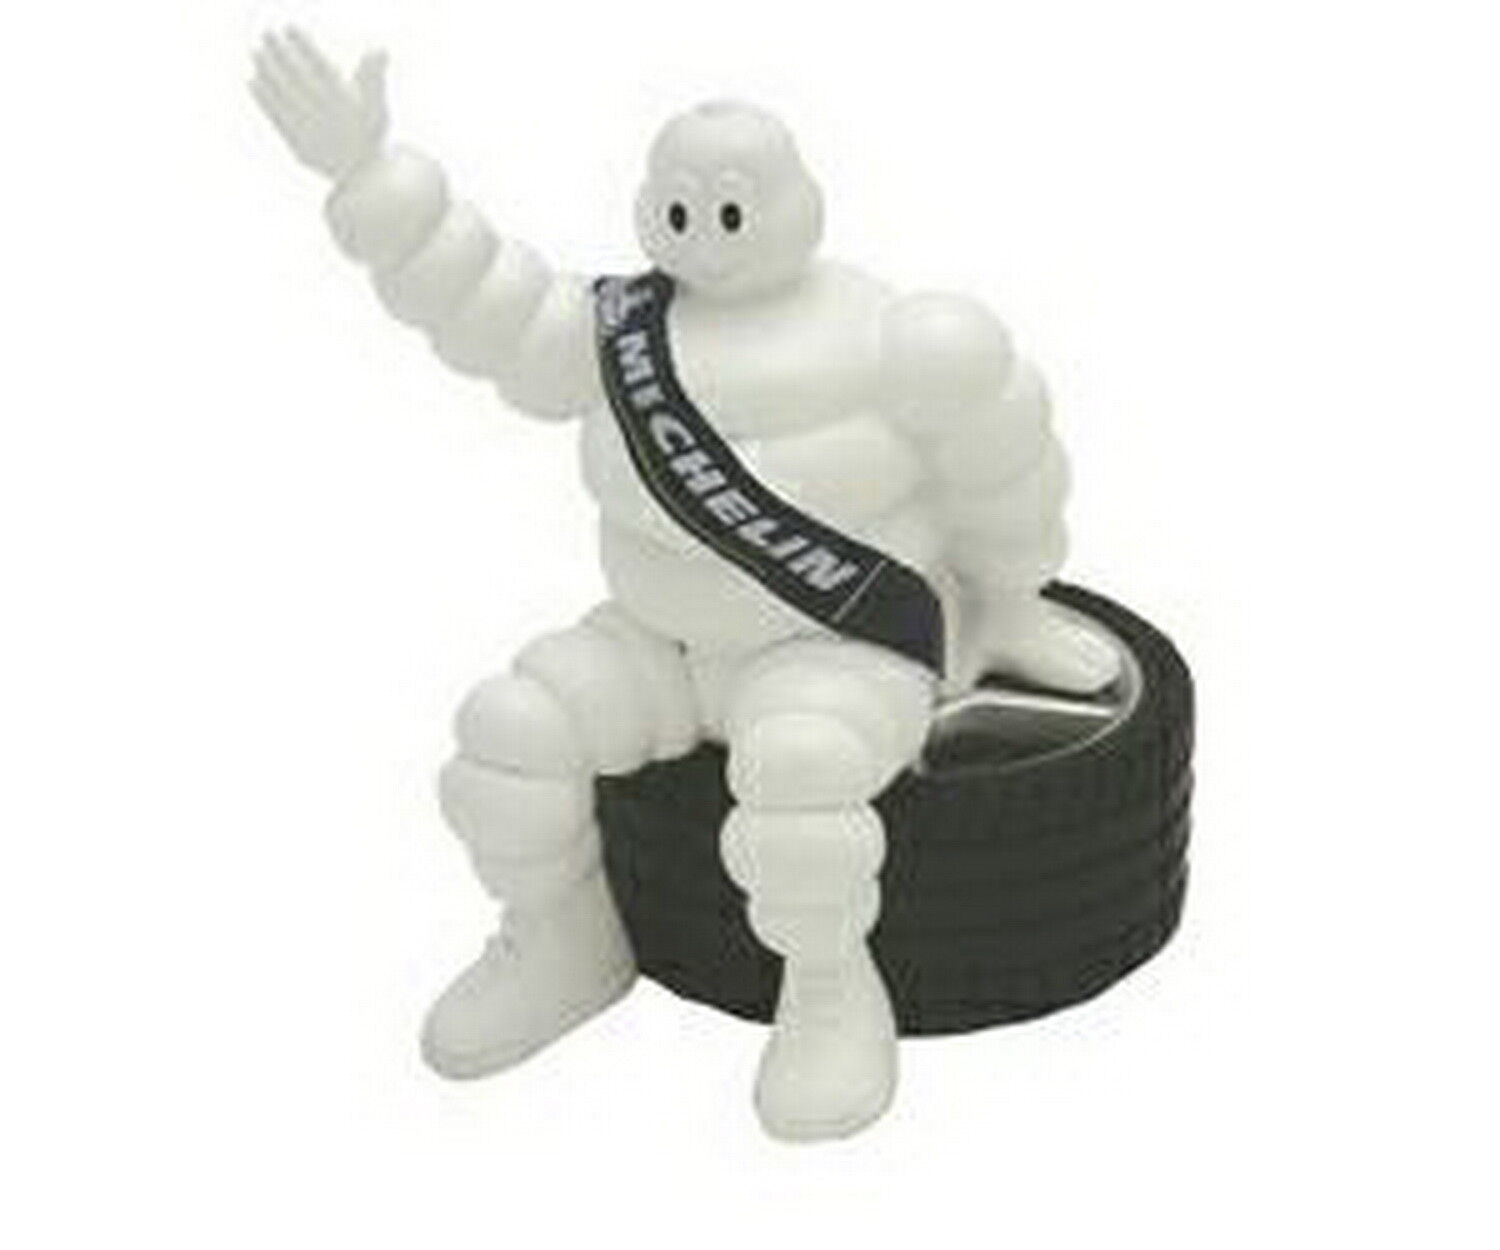 MICHELIN Man Doll Collectible BIBENDUM Figure Sit on Tyre 4"  Air Freshener Car Michelin - фотография #8